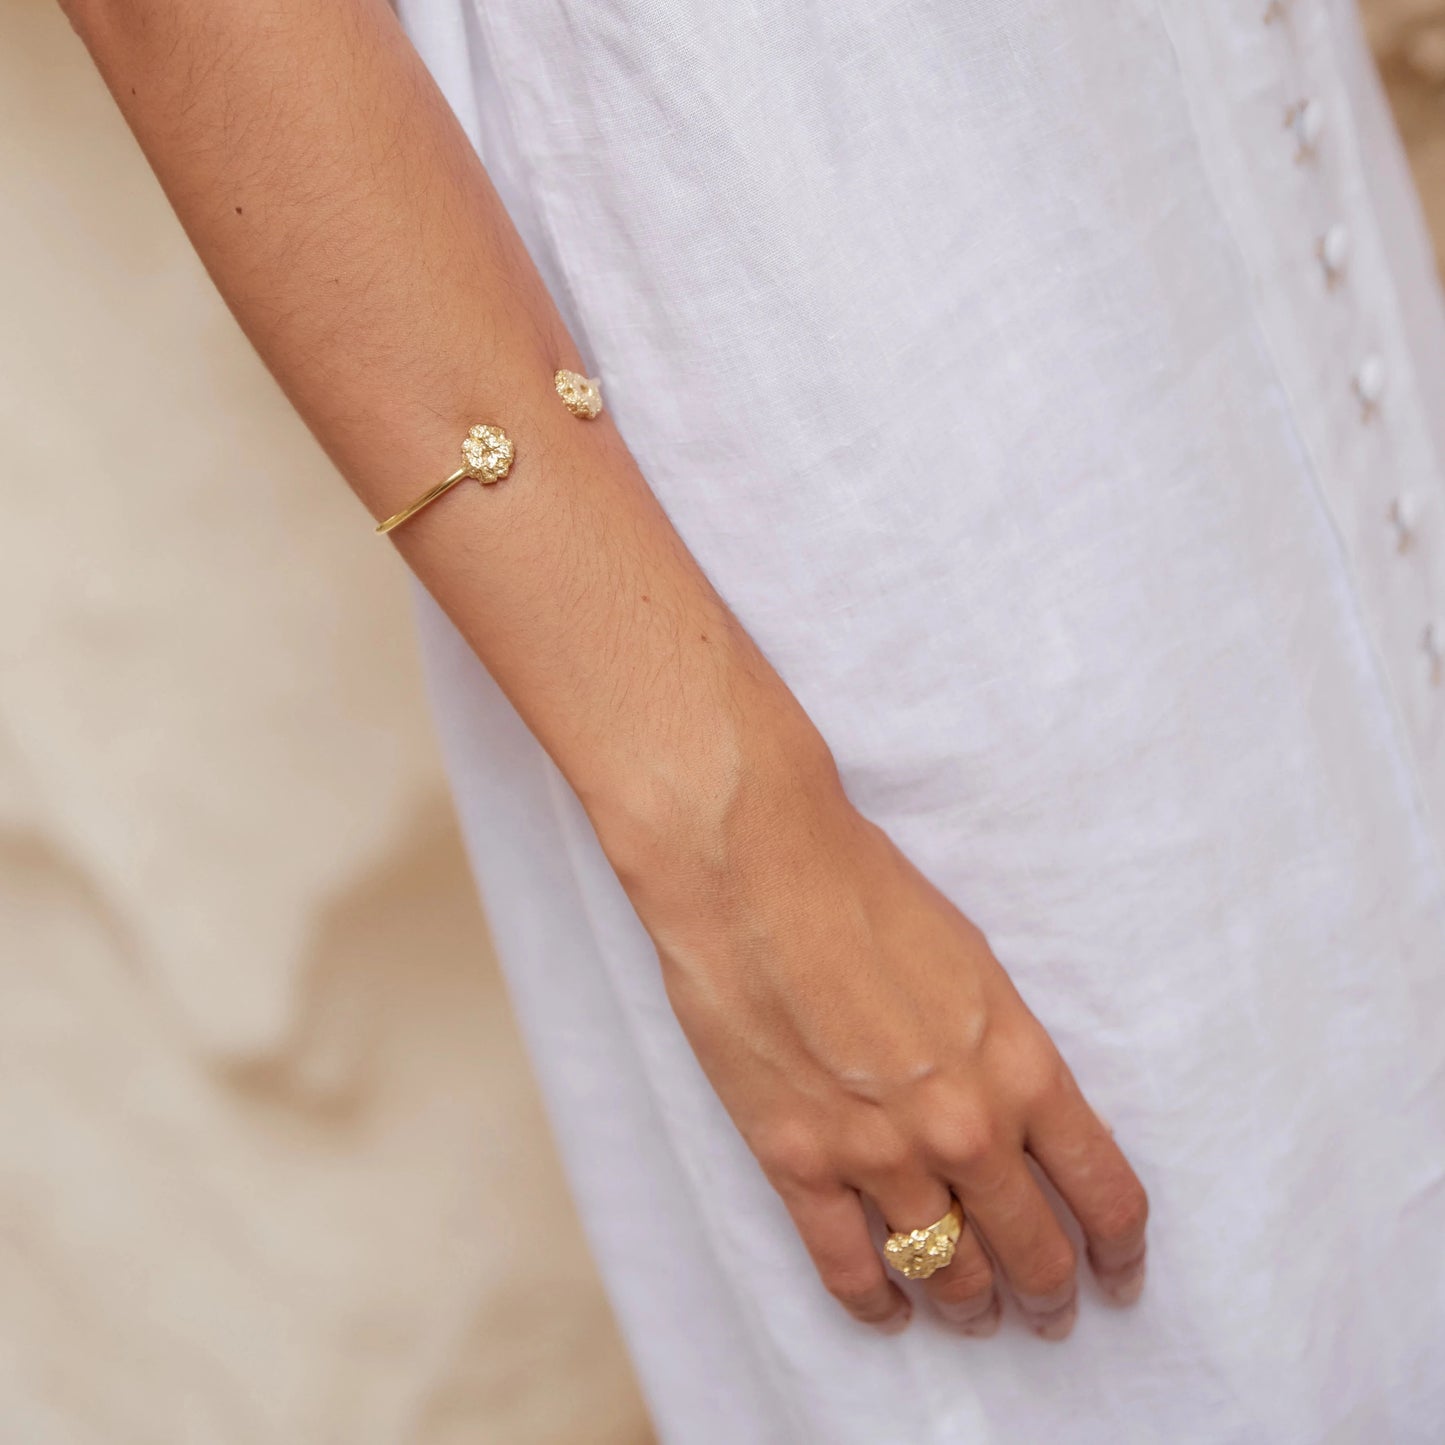 Modelo luciendo el brazalete de Esponja bañado en Oro con traje de lino blanco con fondo arenoso.